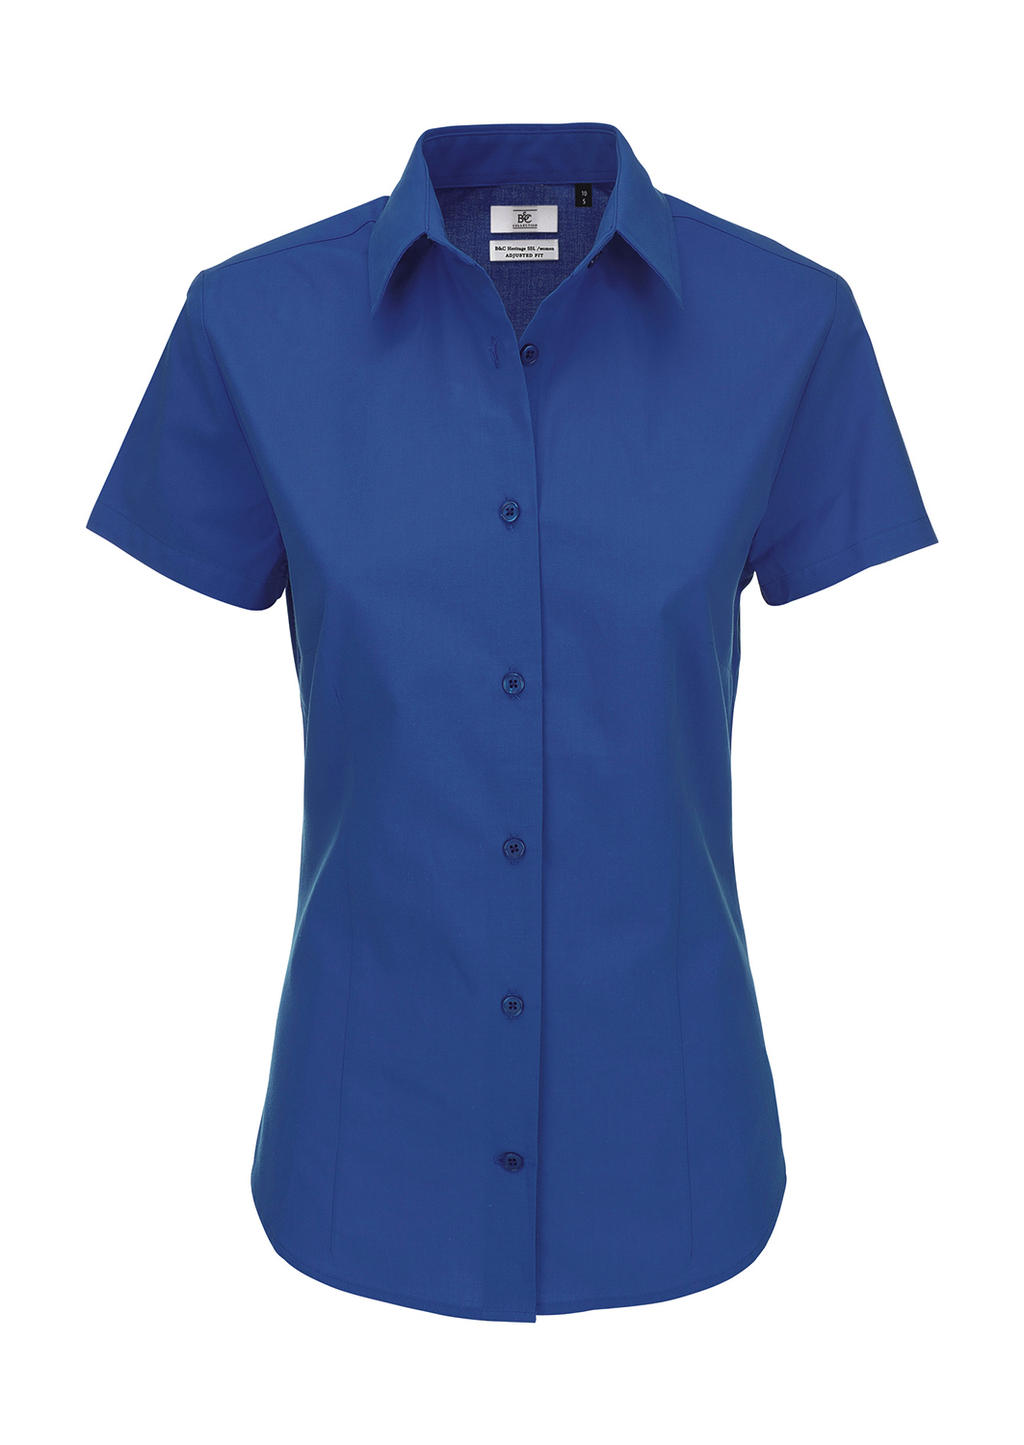  Ladies Heritage Poplin Shirt - SWP44 in Farbe Blue Chip